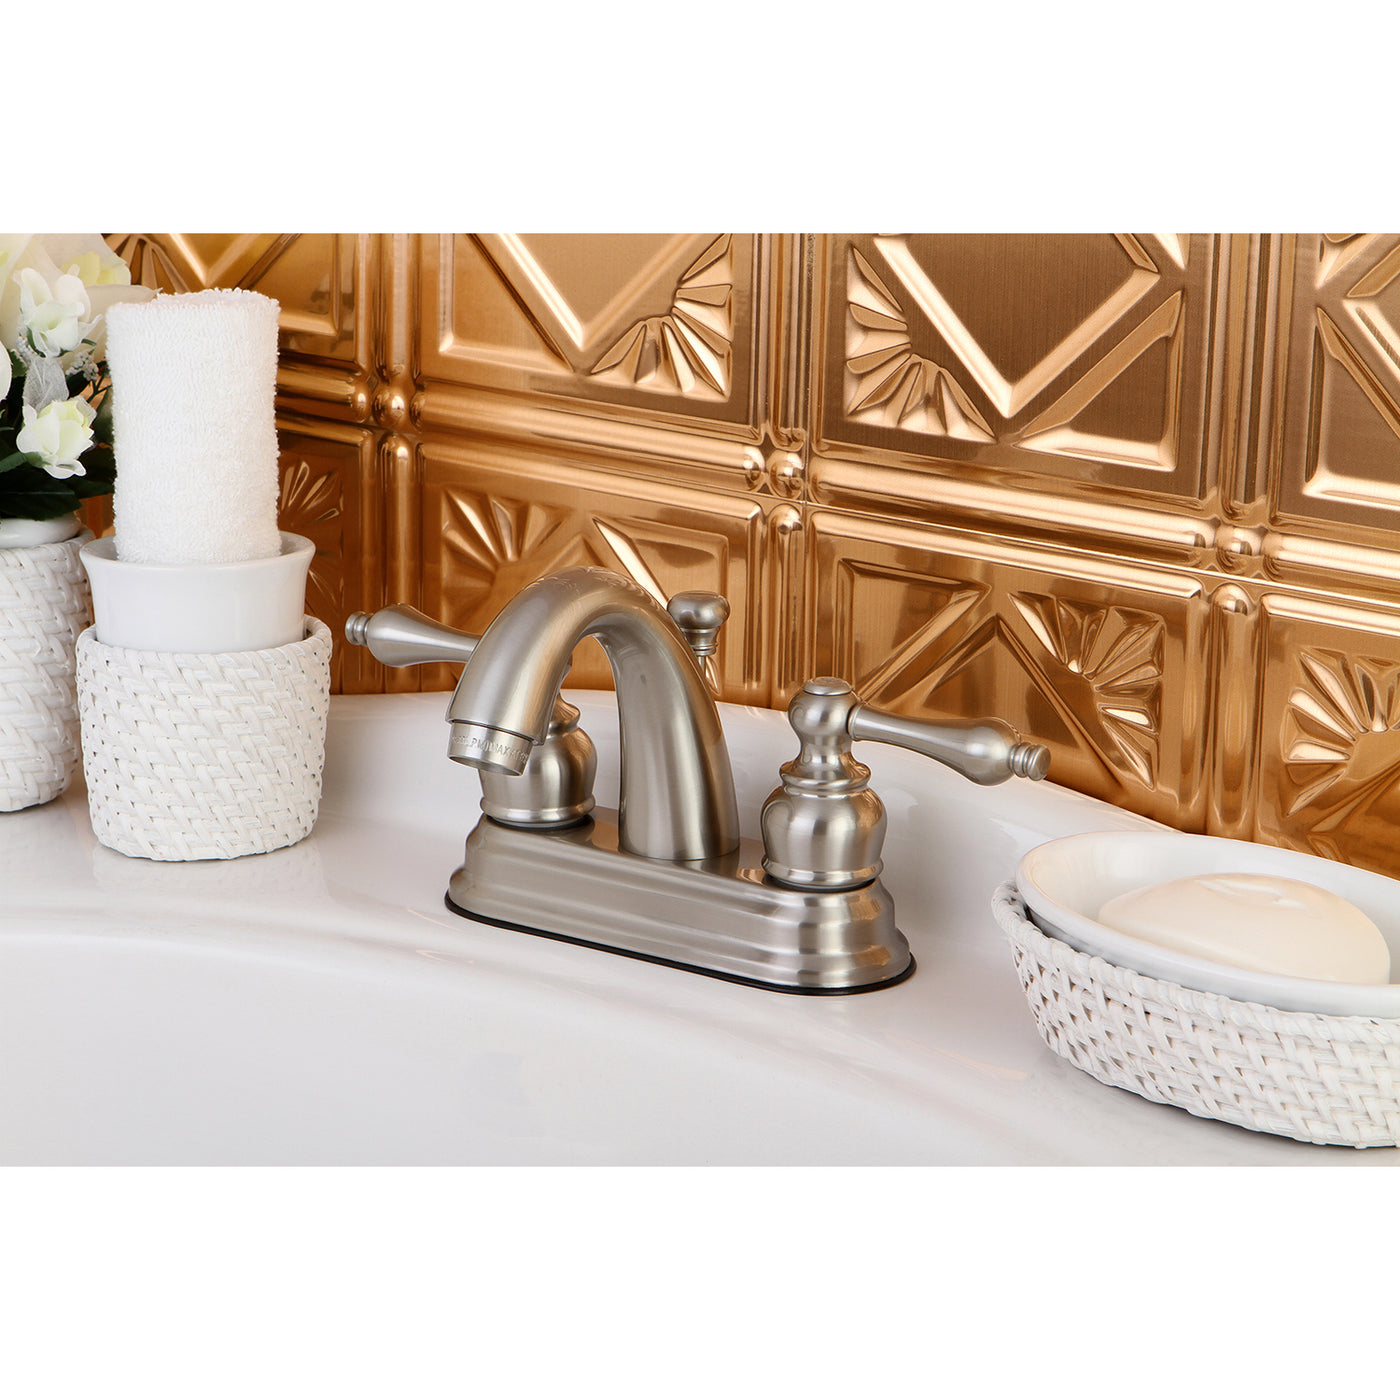 Elements of Design EB5618AL 4-Inch Centerset Bathroom Faucet, Brushed Nickel